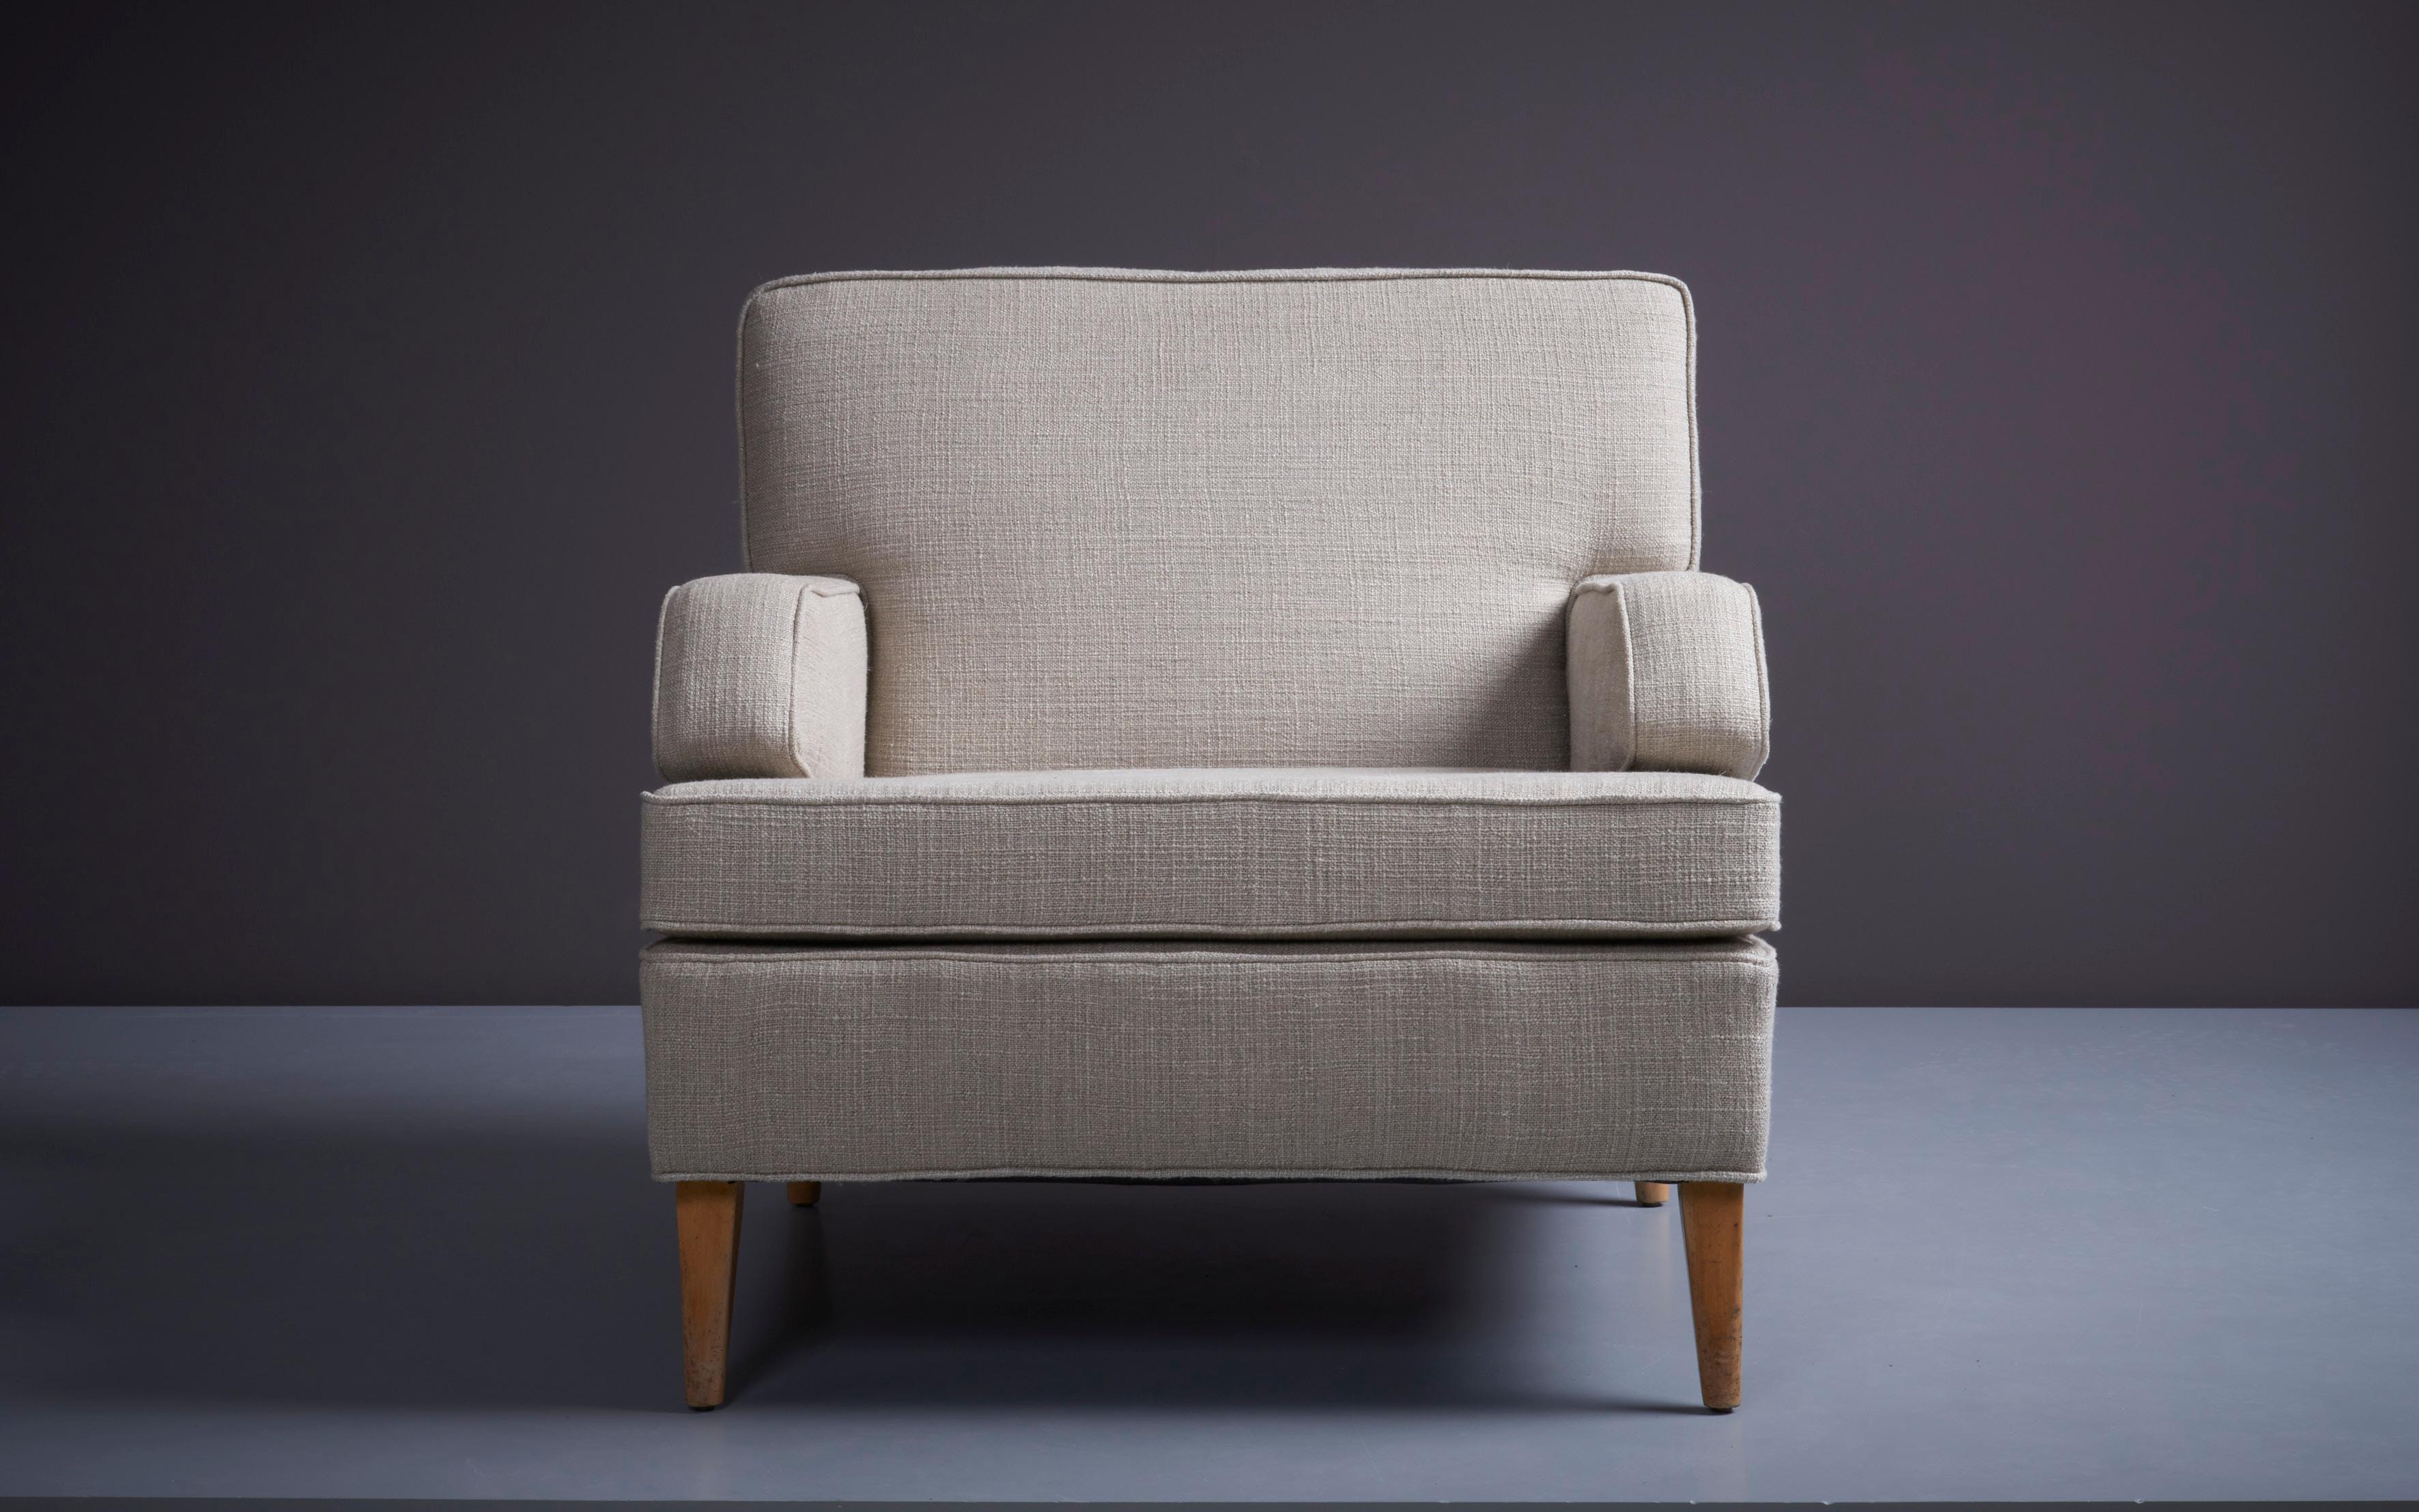 Rare New Upholstered Beige Paul McCobb Set for Directional, USA - 1950s For Sale 1